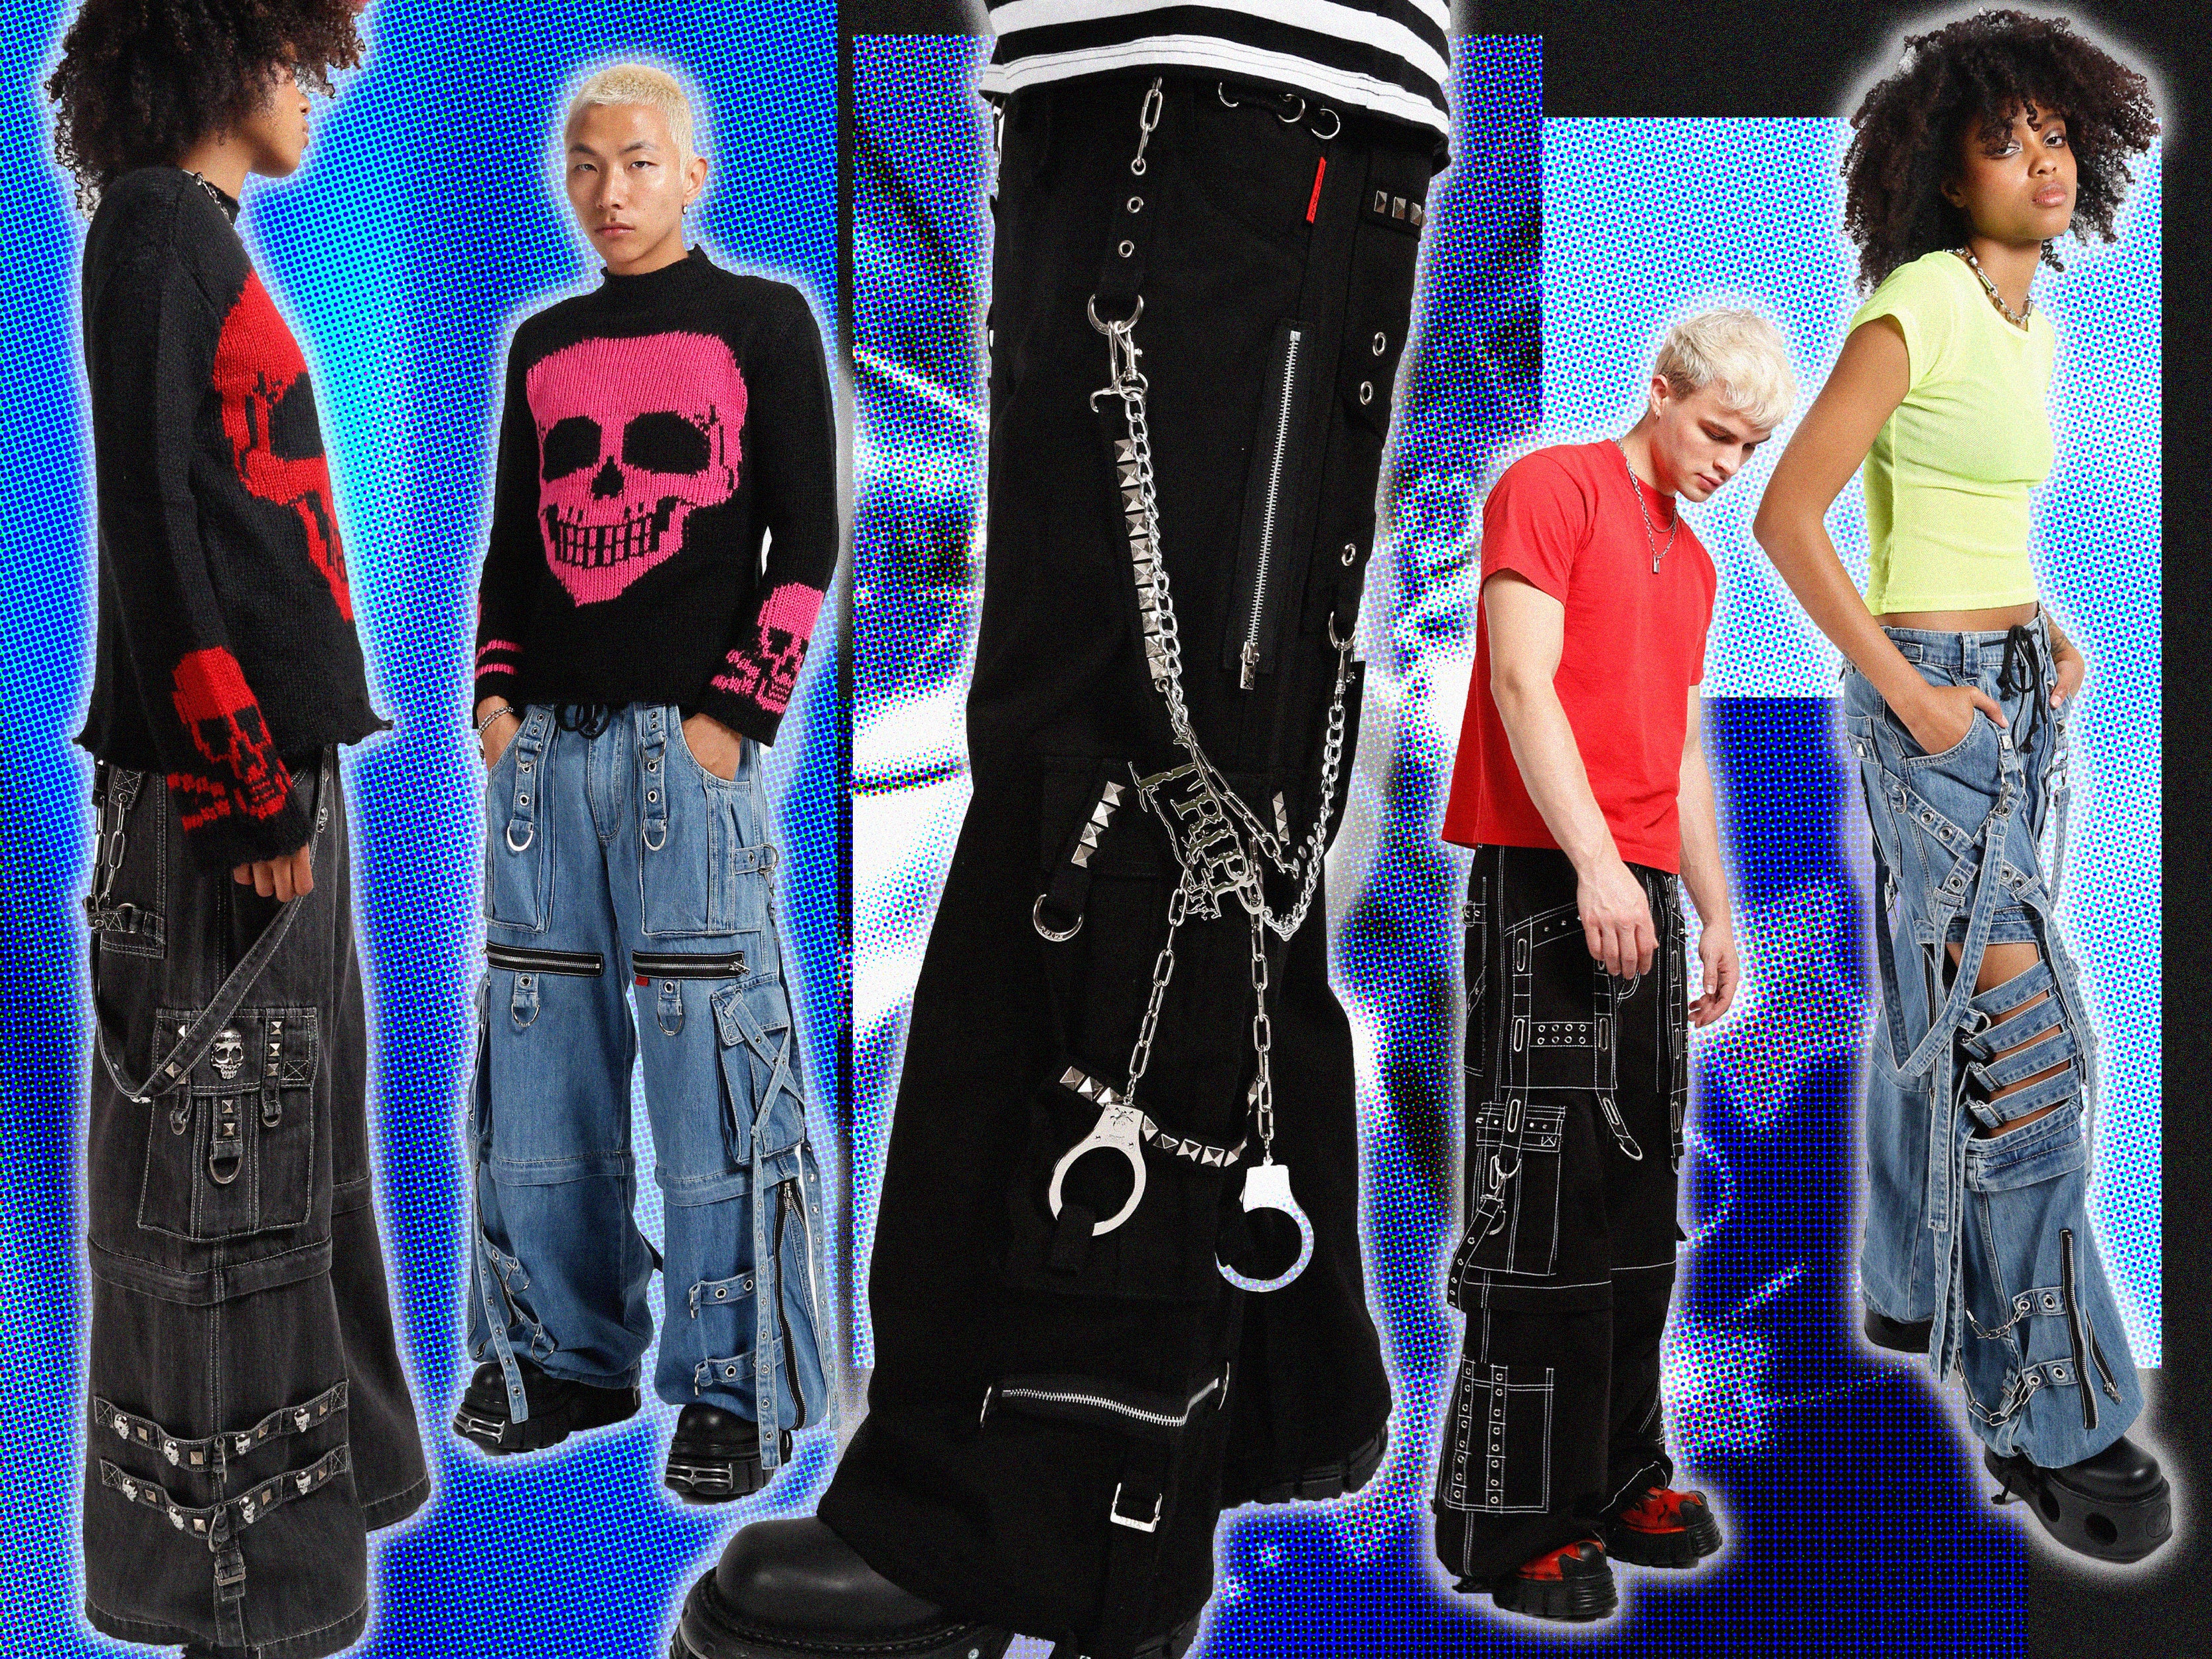 Tripp pants size 3 ladies - Miscellaneous Items - Cleveland, Ohio, Facebook Marketplace